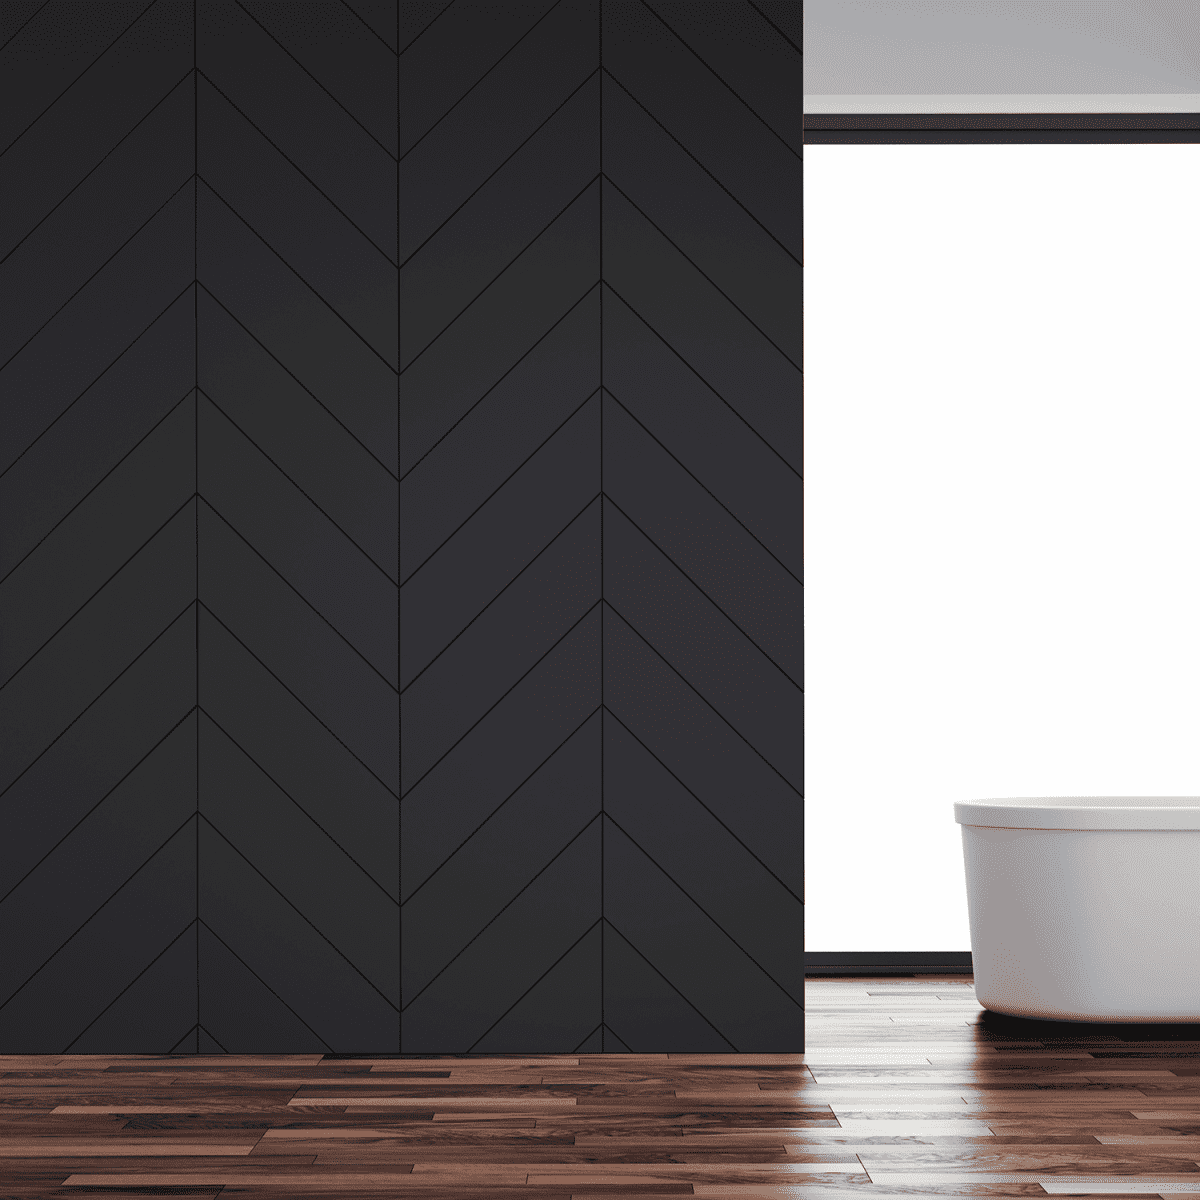 Bathroom interior with hardwood floor and empty tiled black wall